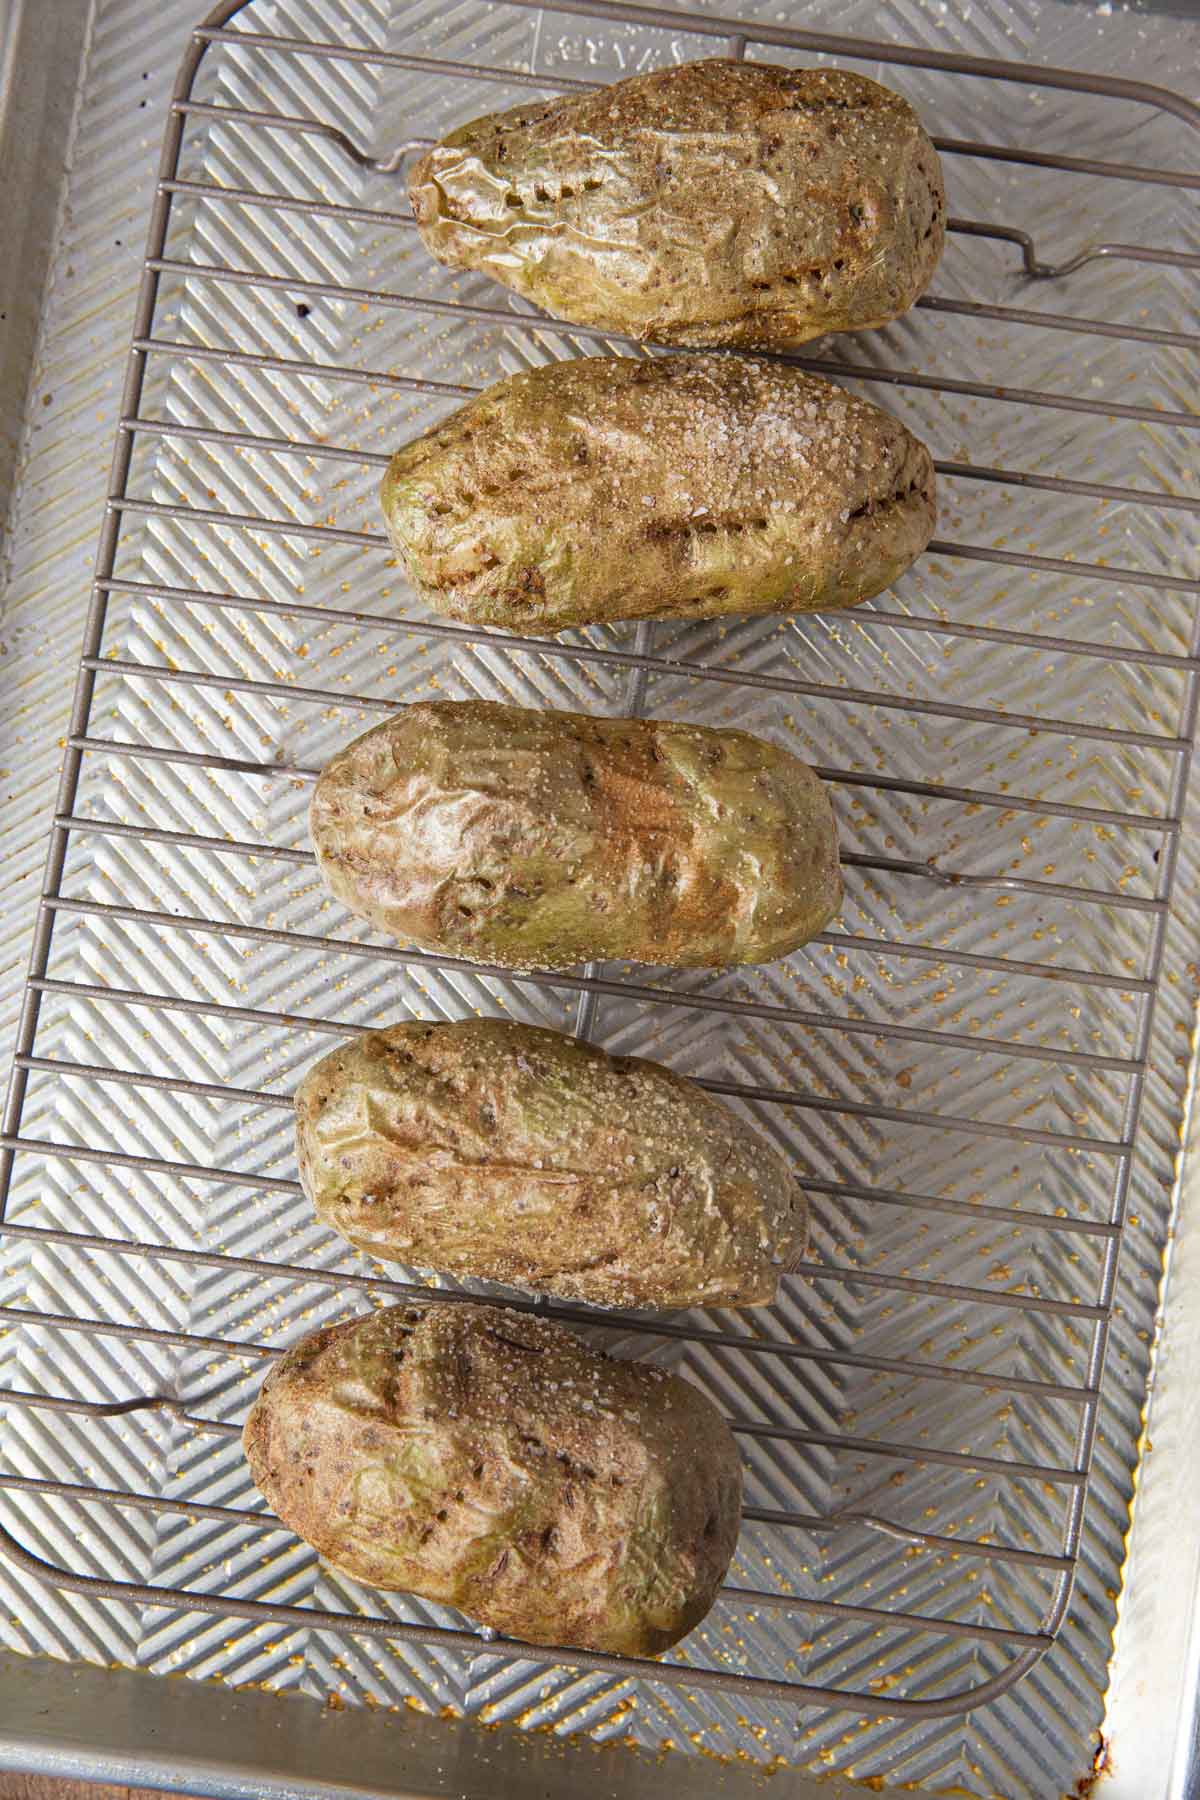 Baked Potatoes on baking rack